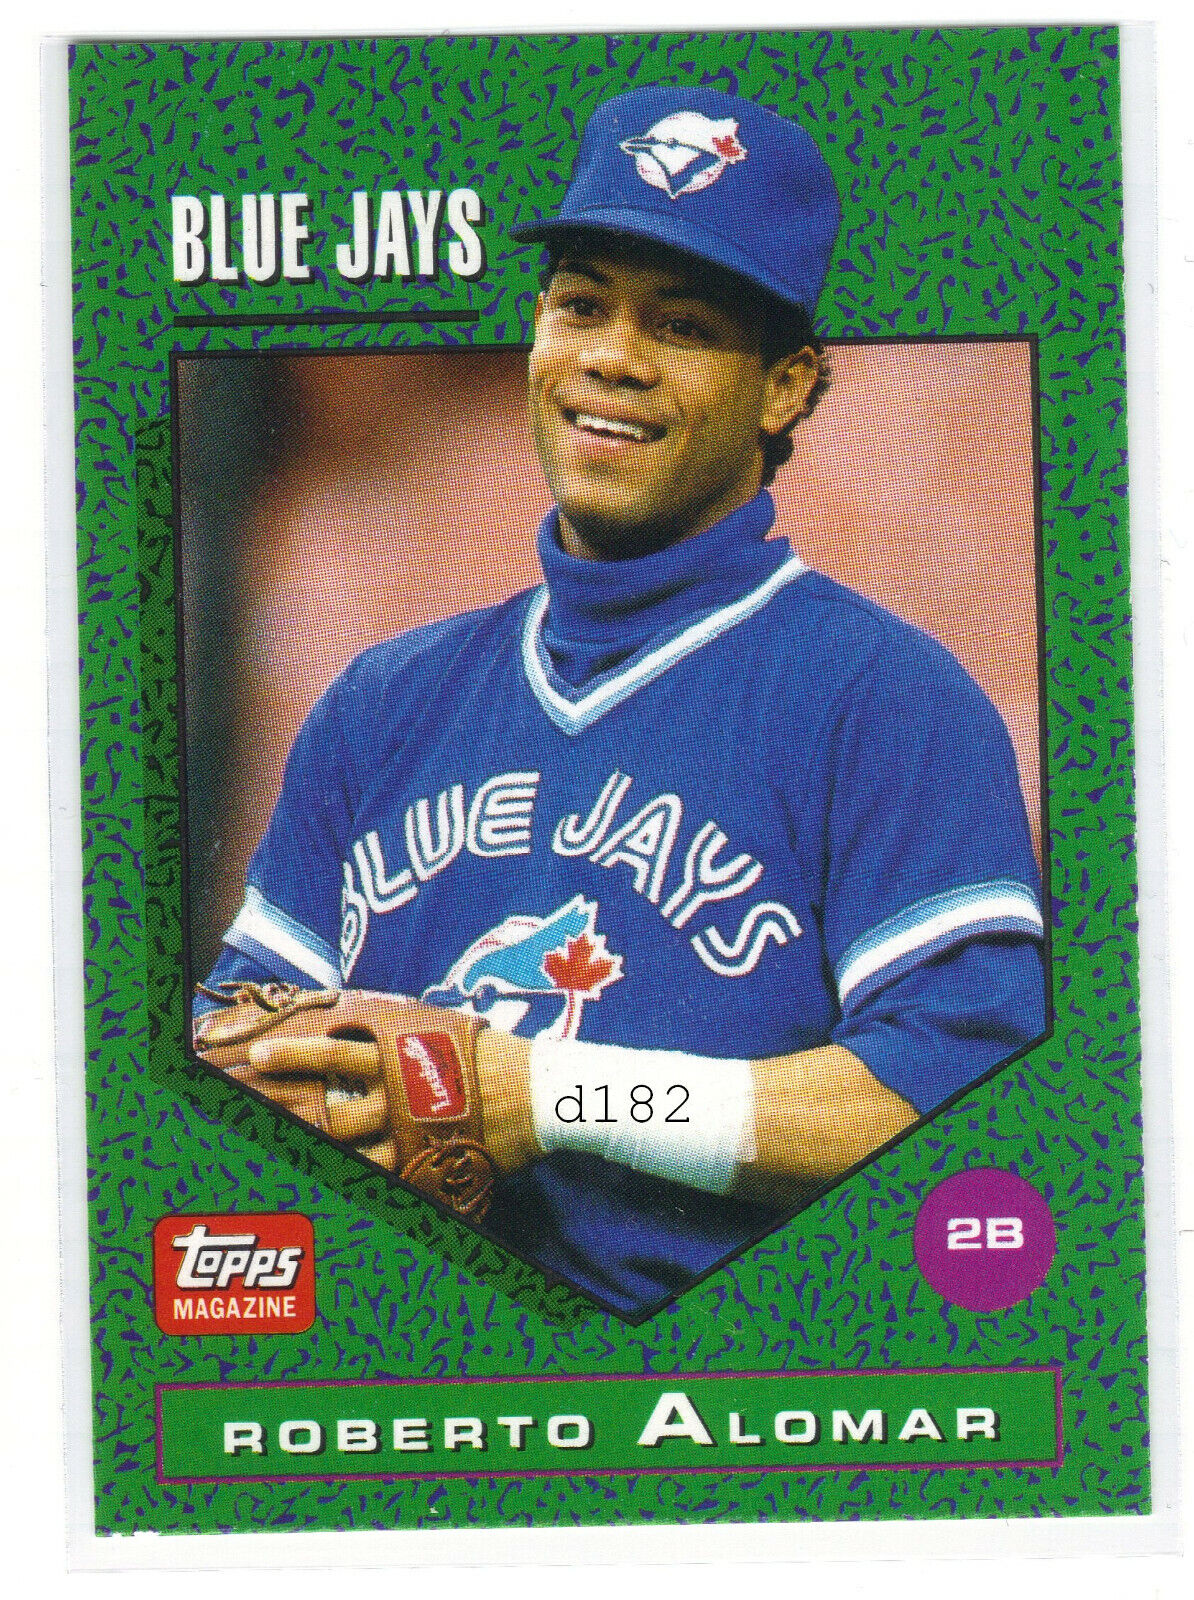 Roberto Alomar Toronto Blue Jays 1992 Topps Magazine baseball card oddball